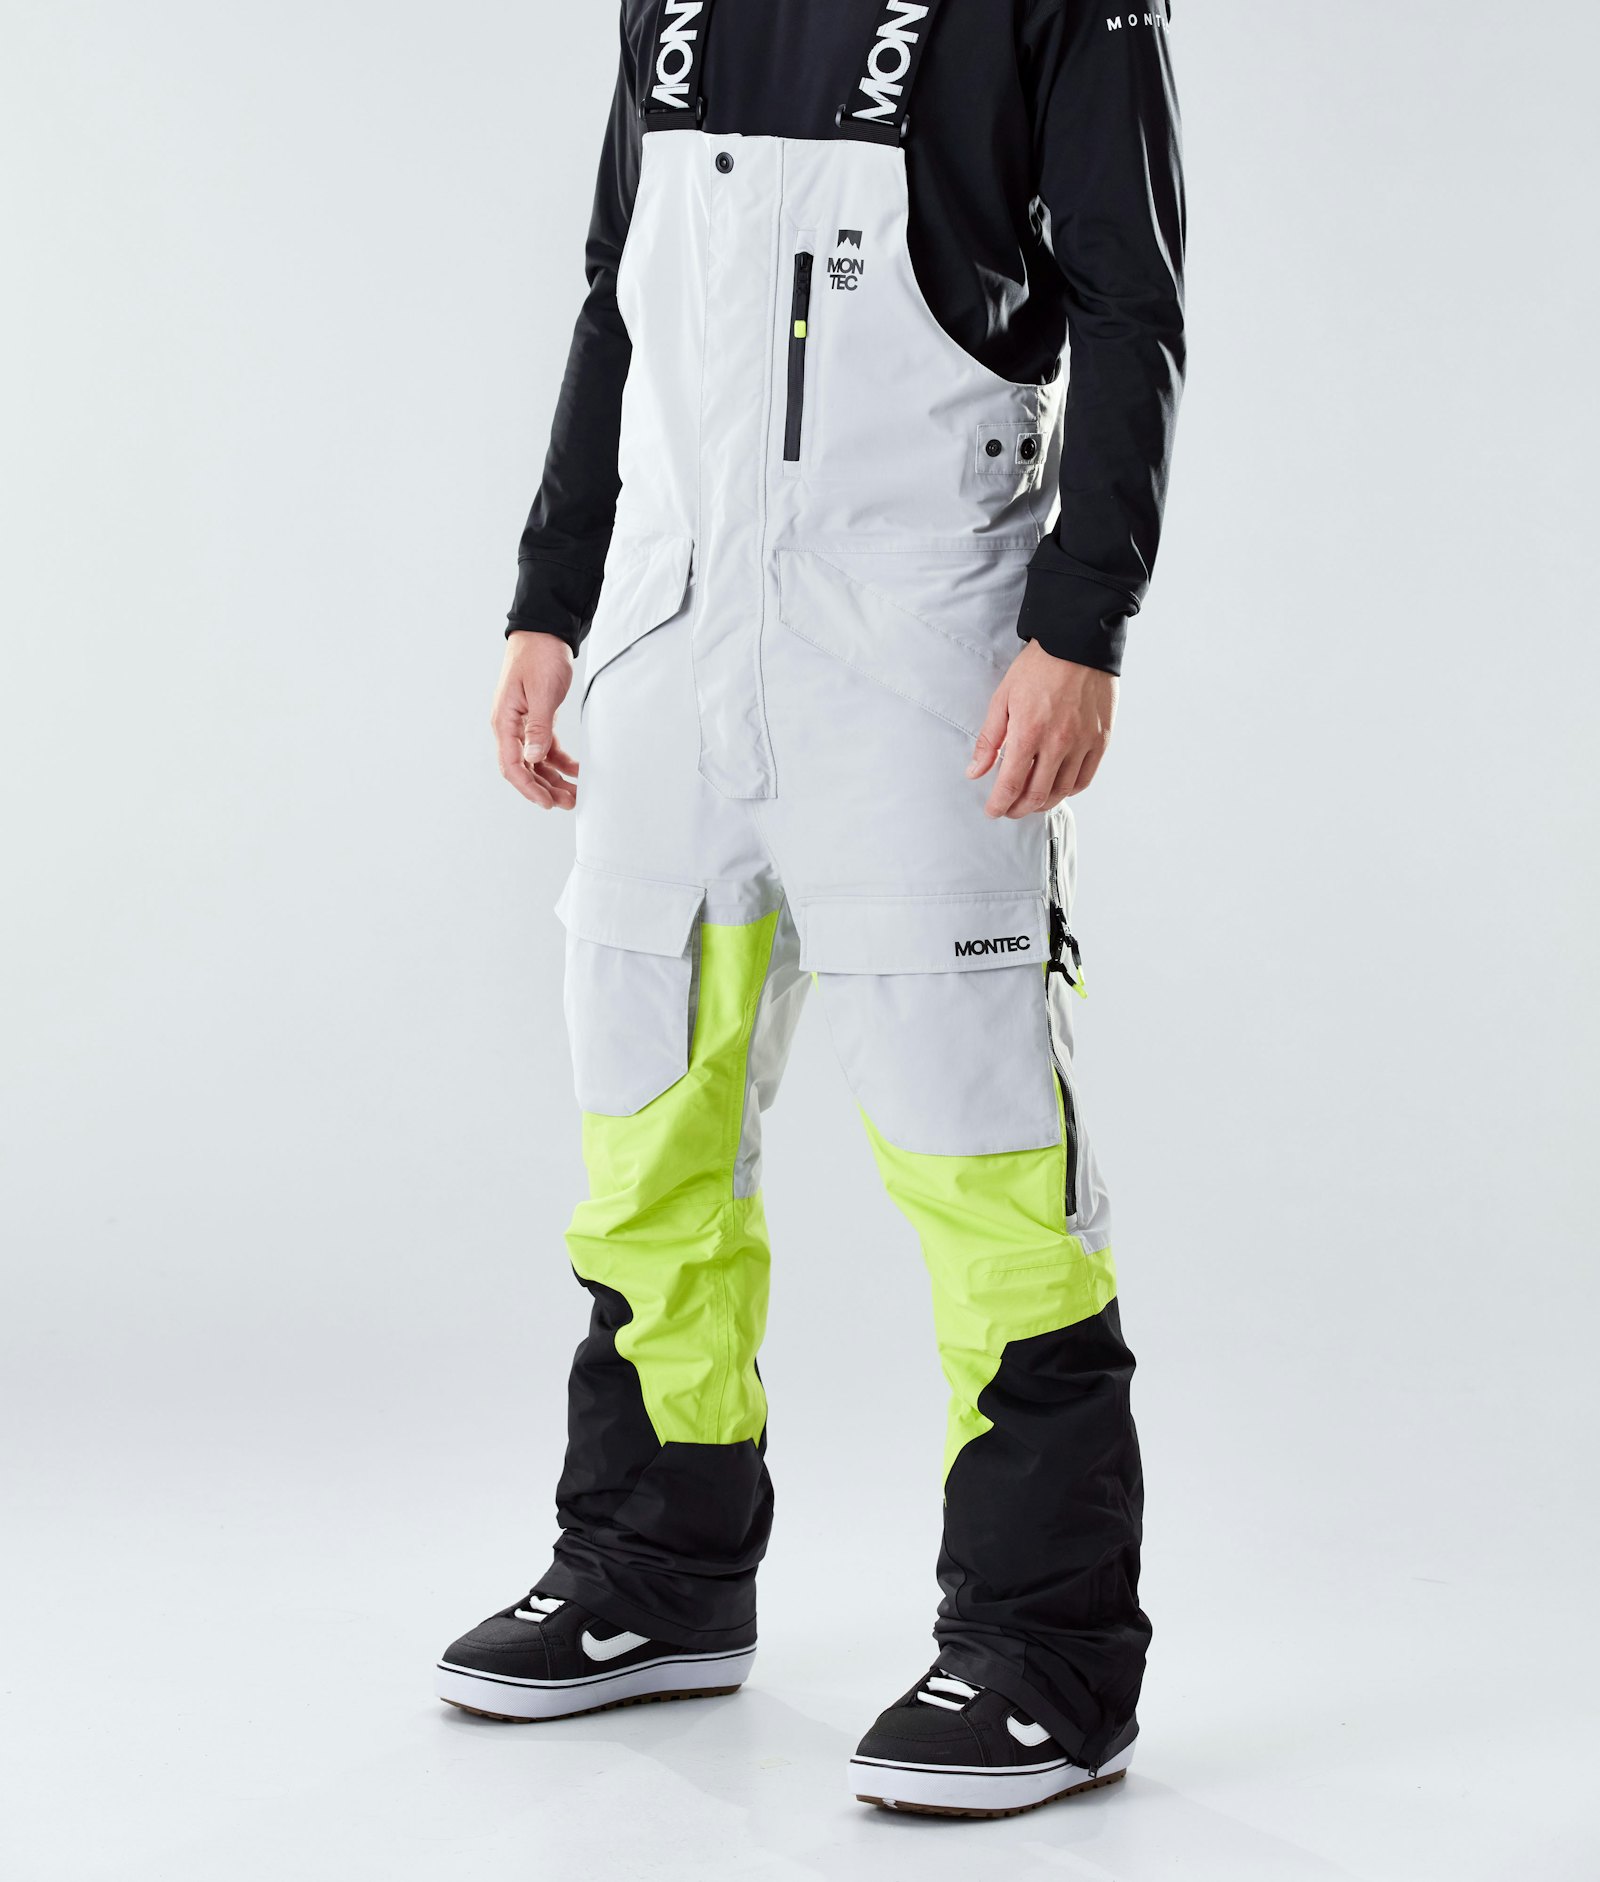 Fawk 2020 Pantalon de Snowboard Homme Light Grey/Neon Yellow/Black